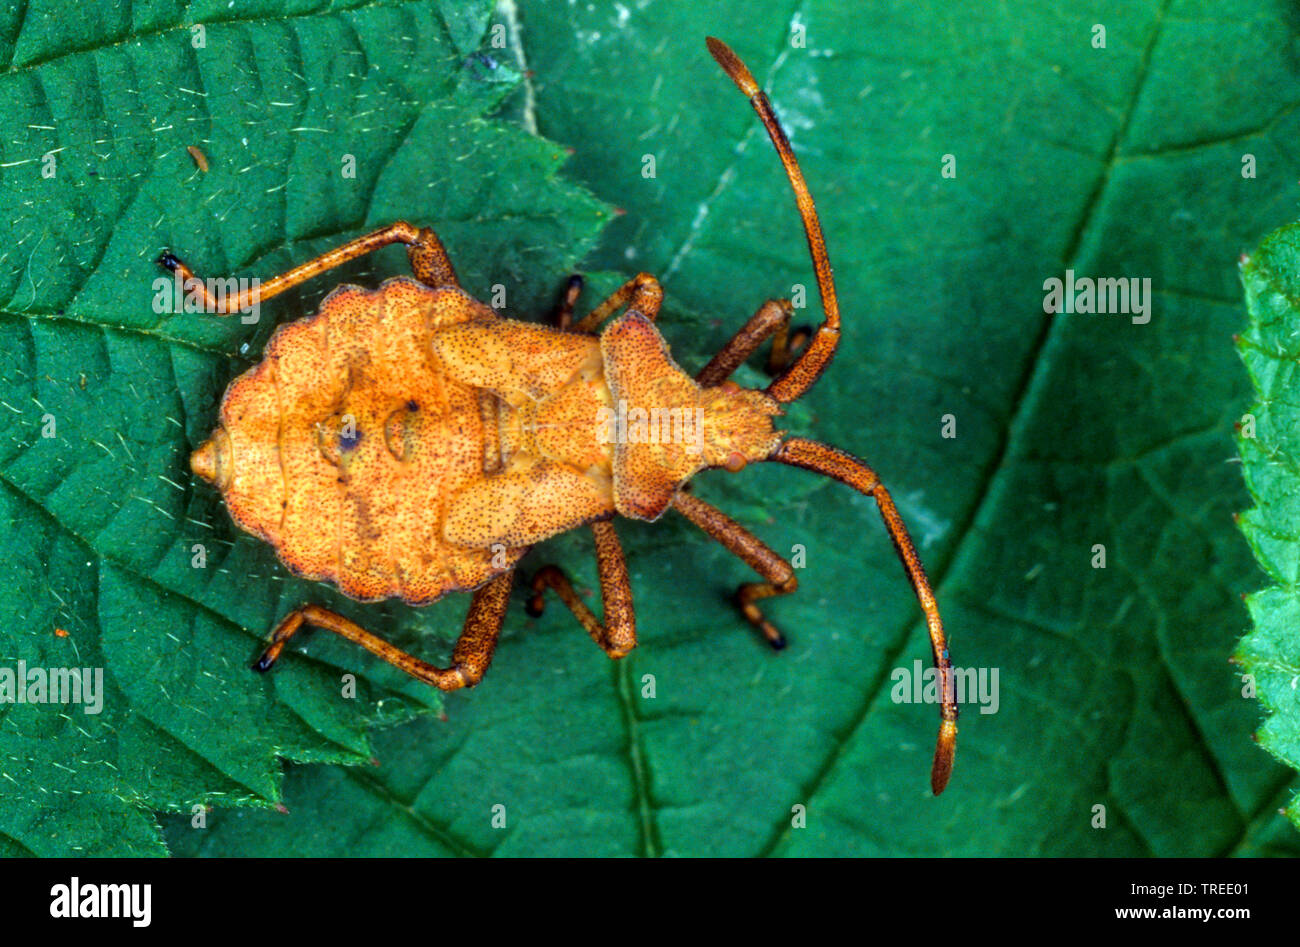 Squash bug (Coreus marginatus, Mesocerus marginatus), nymph, Germany Stock Photo